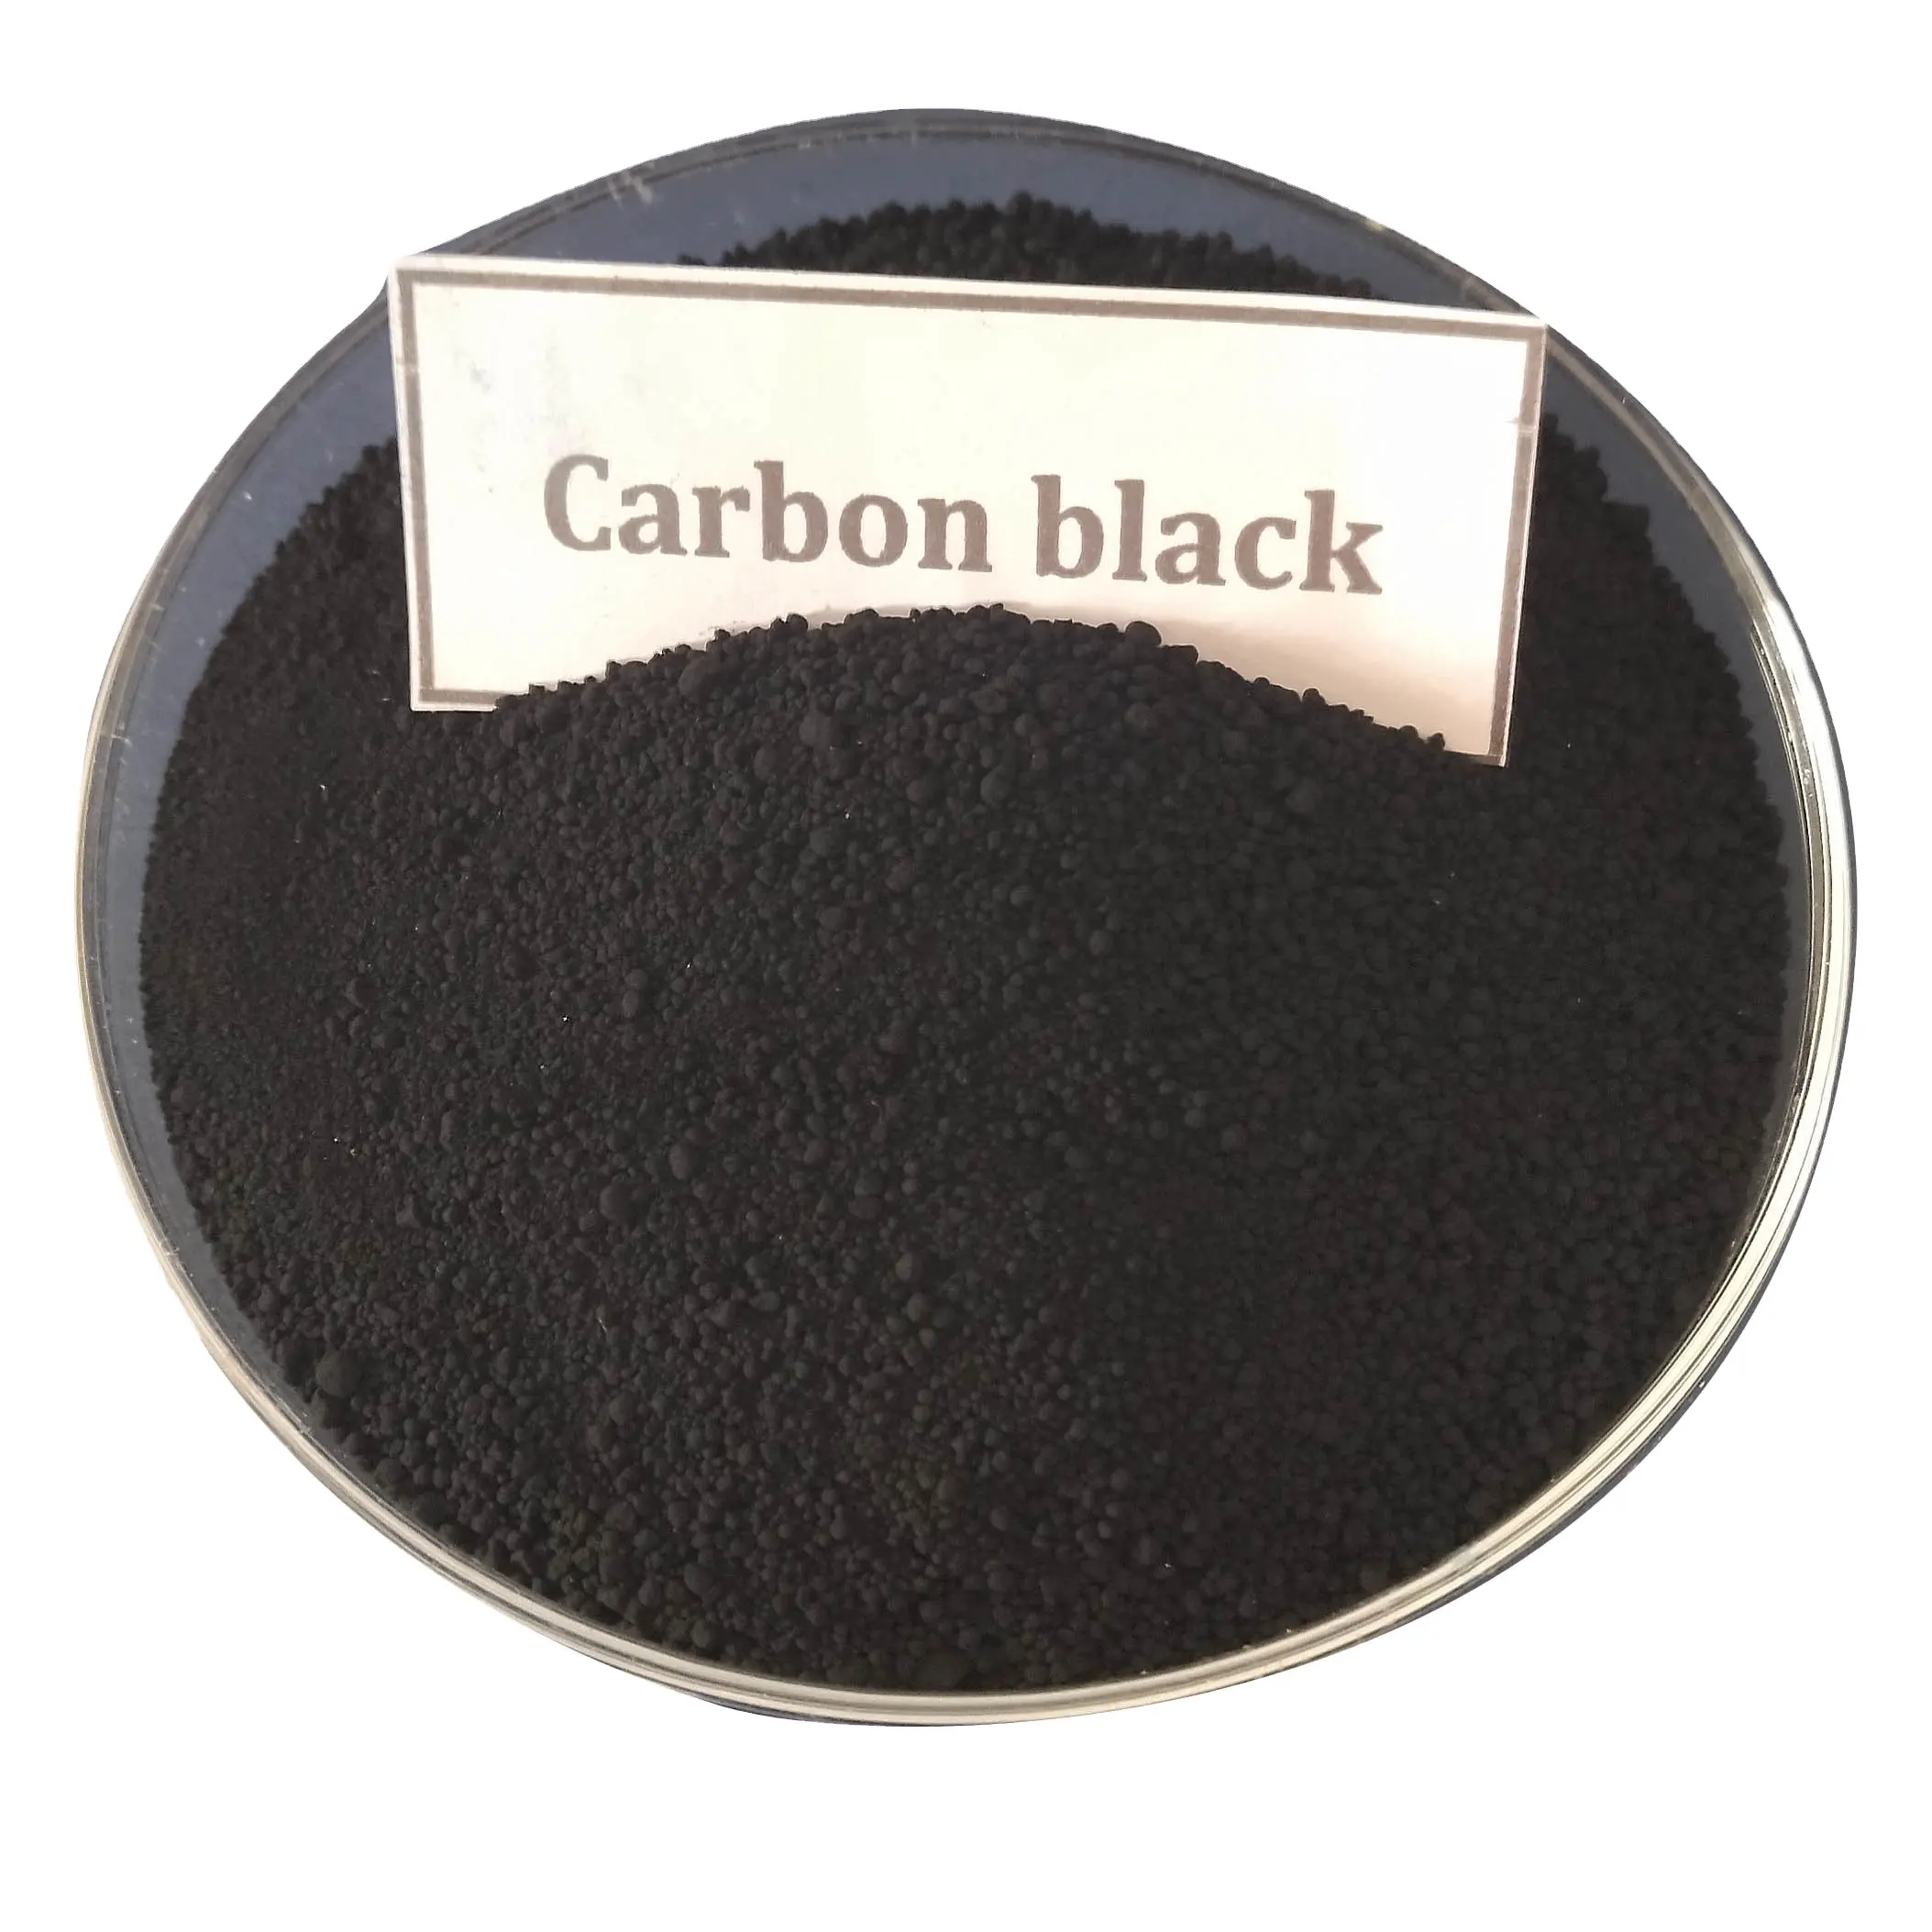 Carbon Black (N550) Hoogwaardige Actieve Kool Zwart In Rubber En Plastic Carbon Black Voor Verfindustrieën